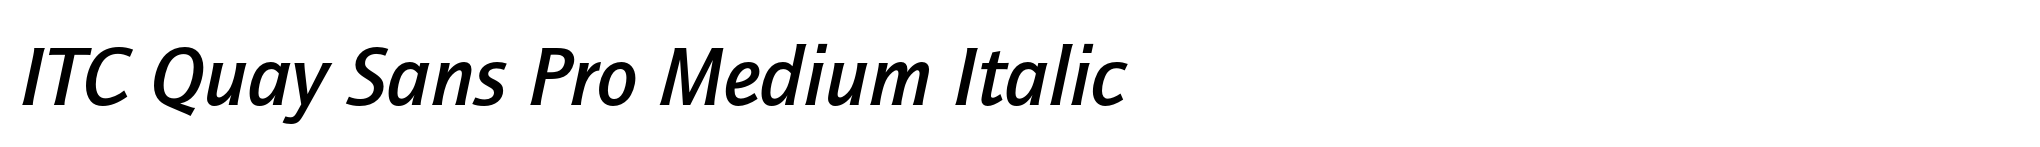 ITC Quay Sans Pro Medium Italic image